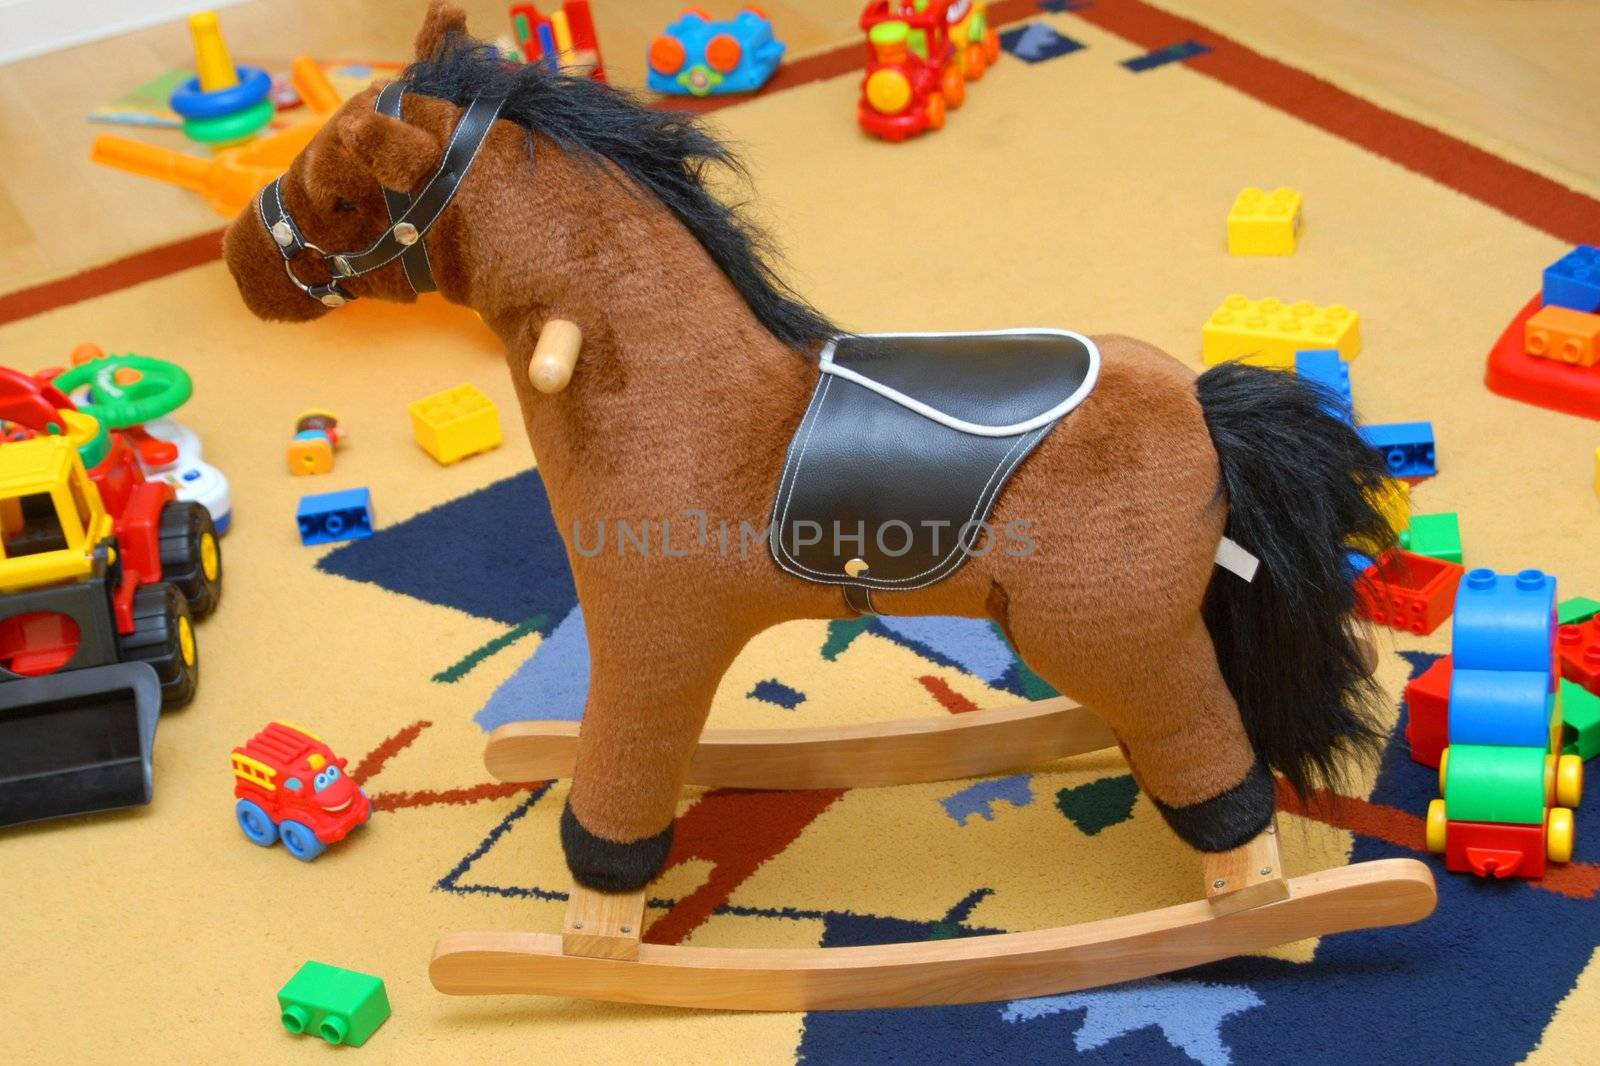 Rocking horse by Yaurinko